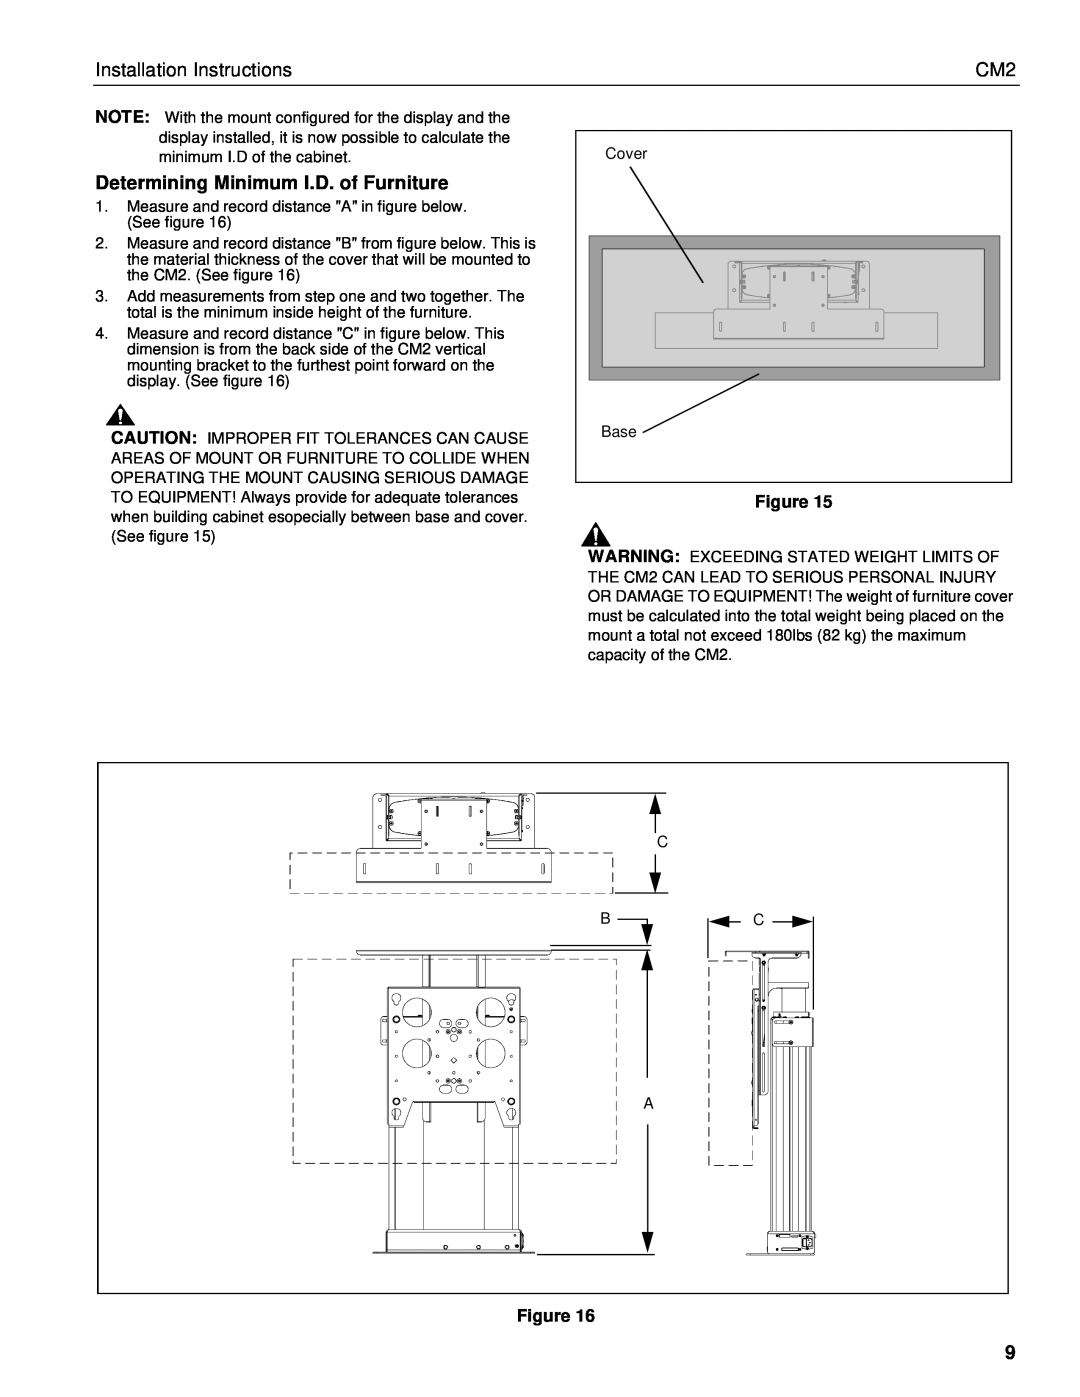 Chief Manufacturing CM2 installation instructions Determining Minimum I.D. of Furniture, Installation Instructions 